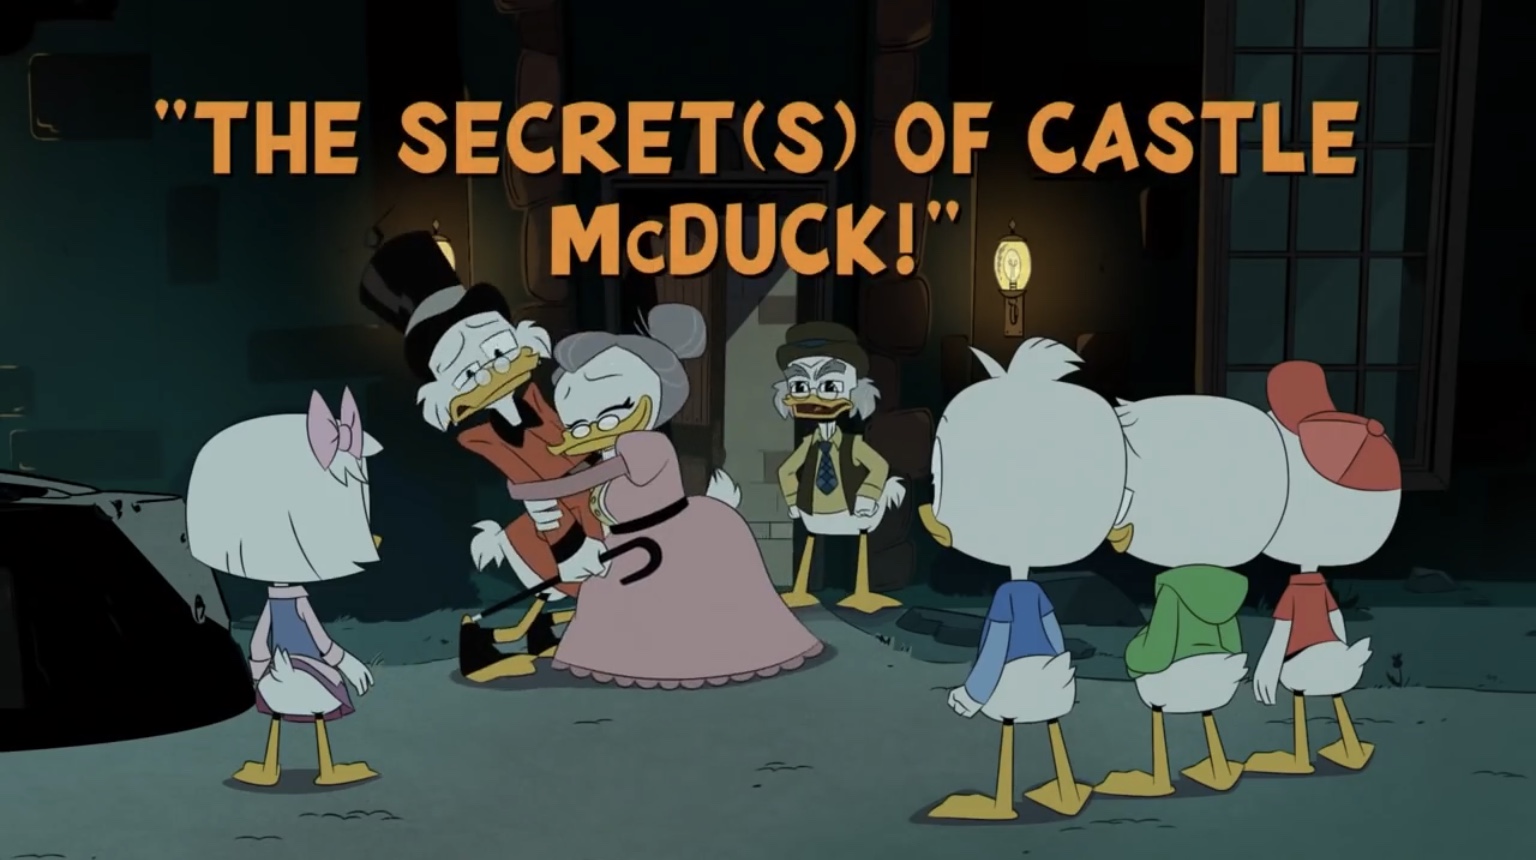 21 серия 1 сезона The Secret(s) of Castle McDuck